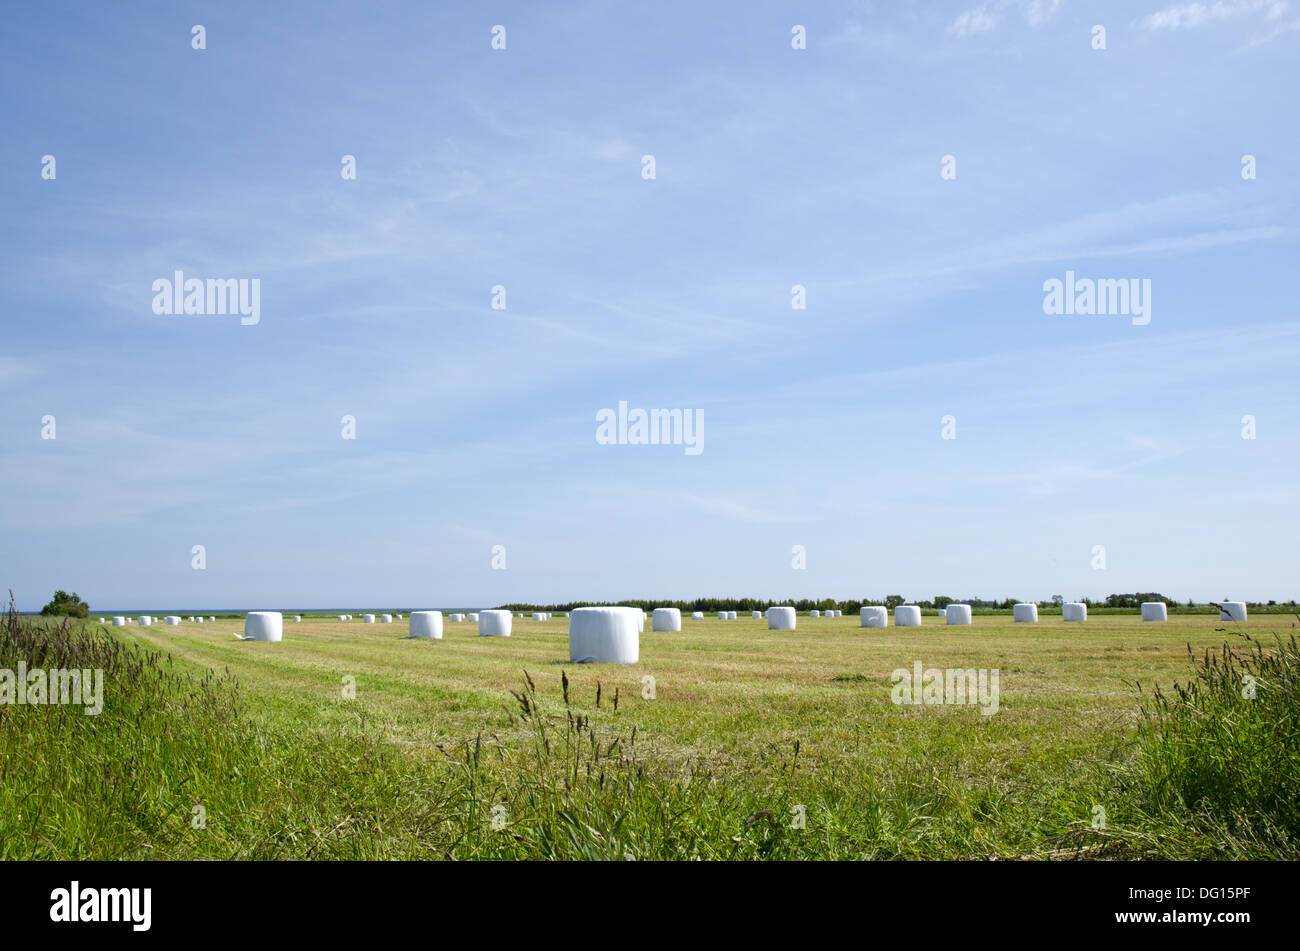 Field of plastic bales Stock Photo